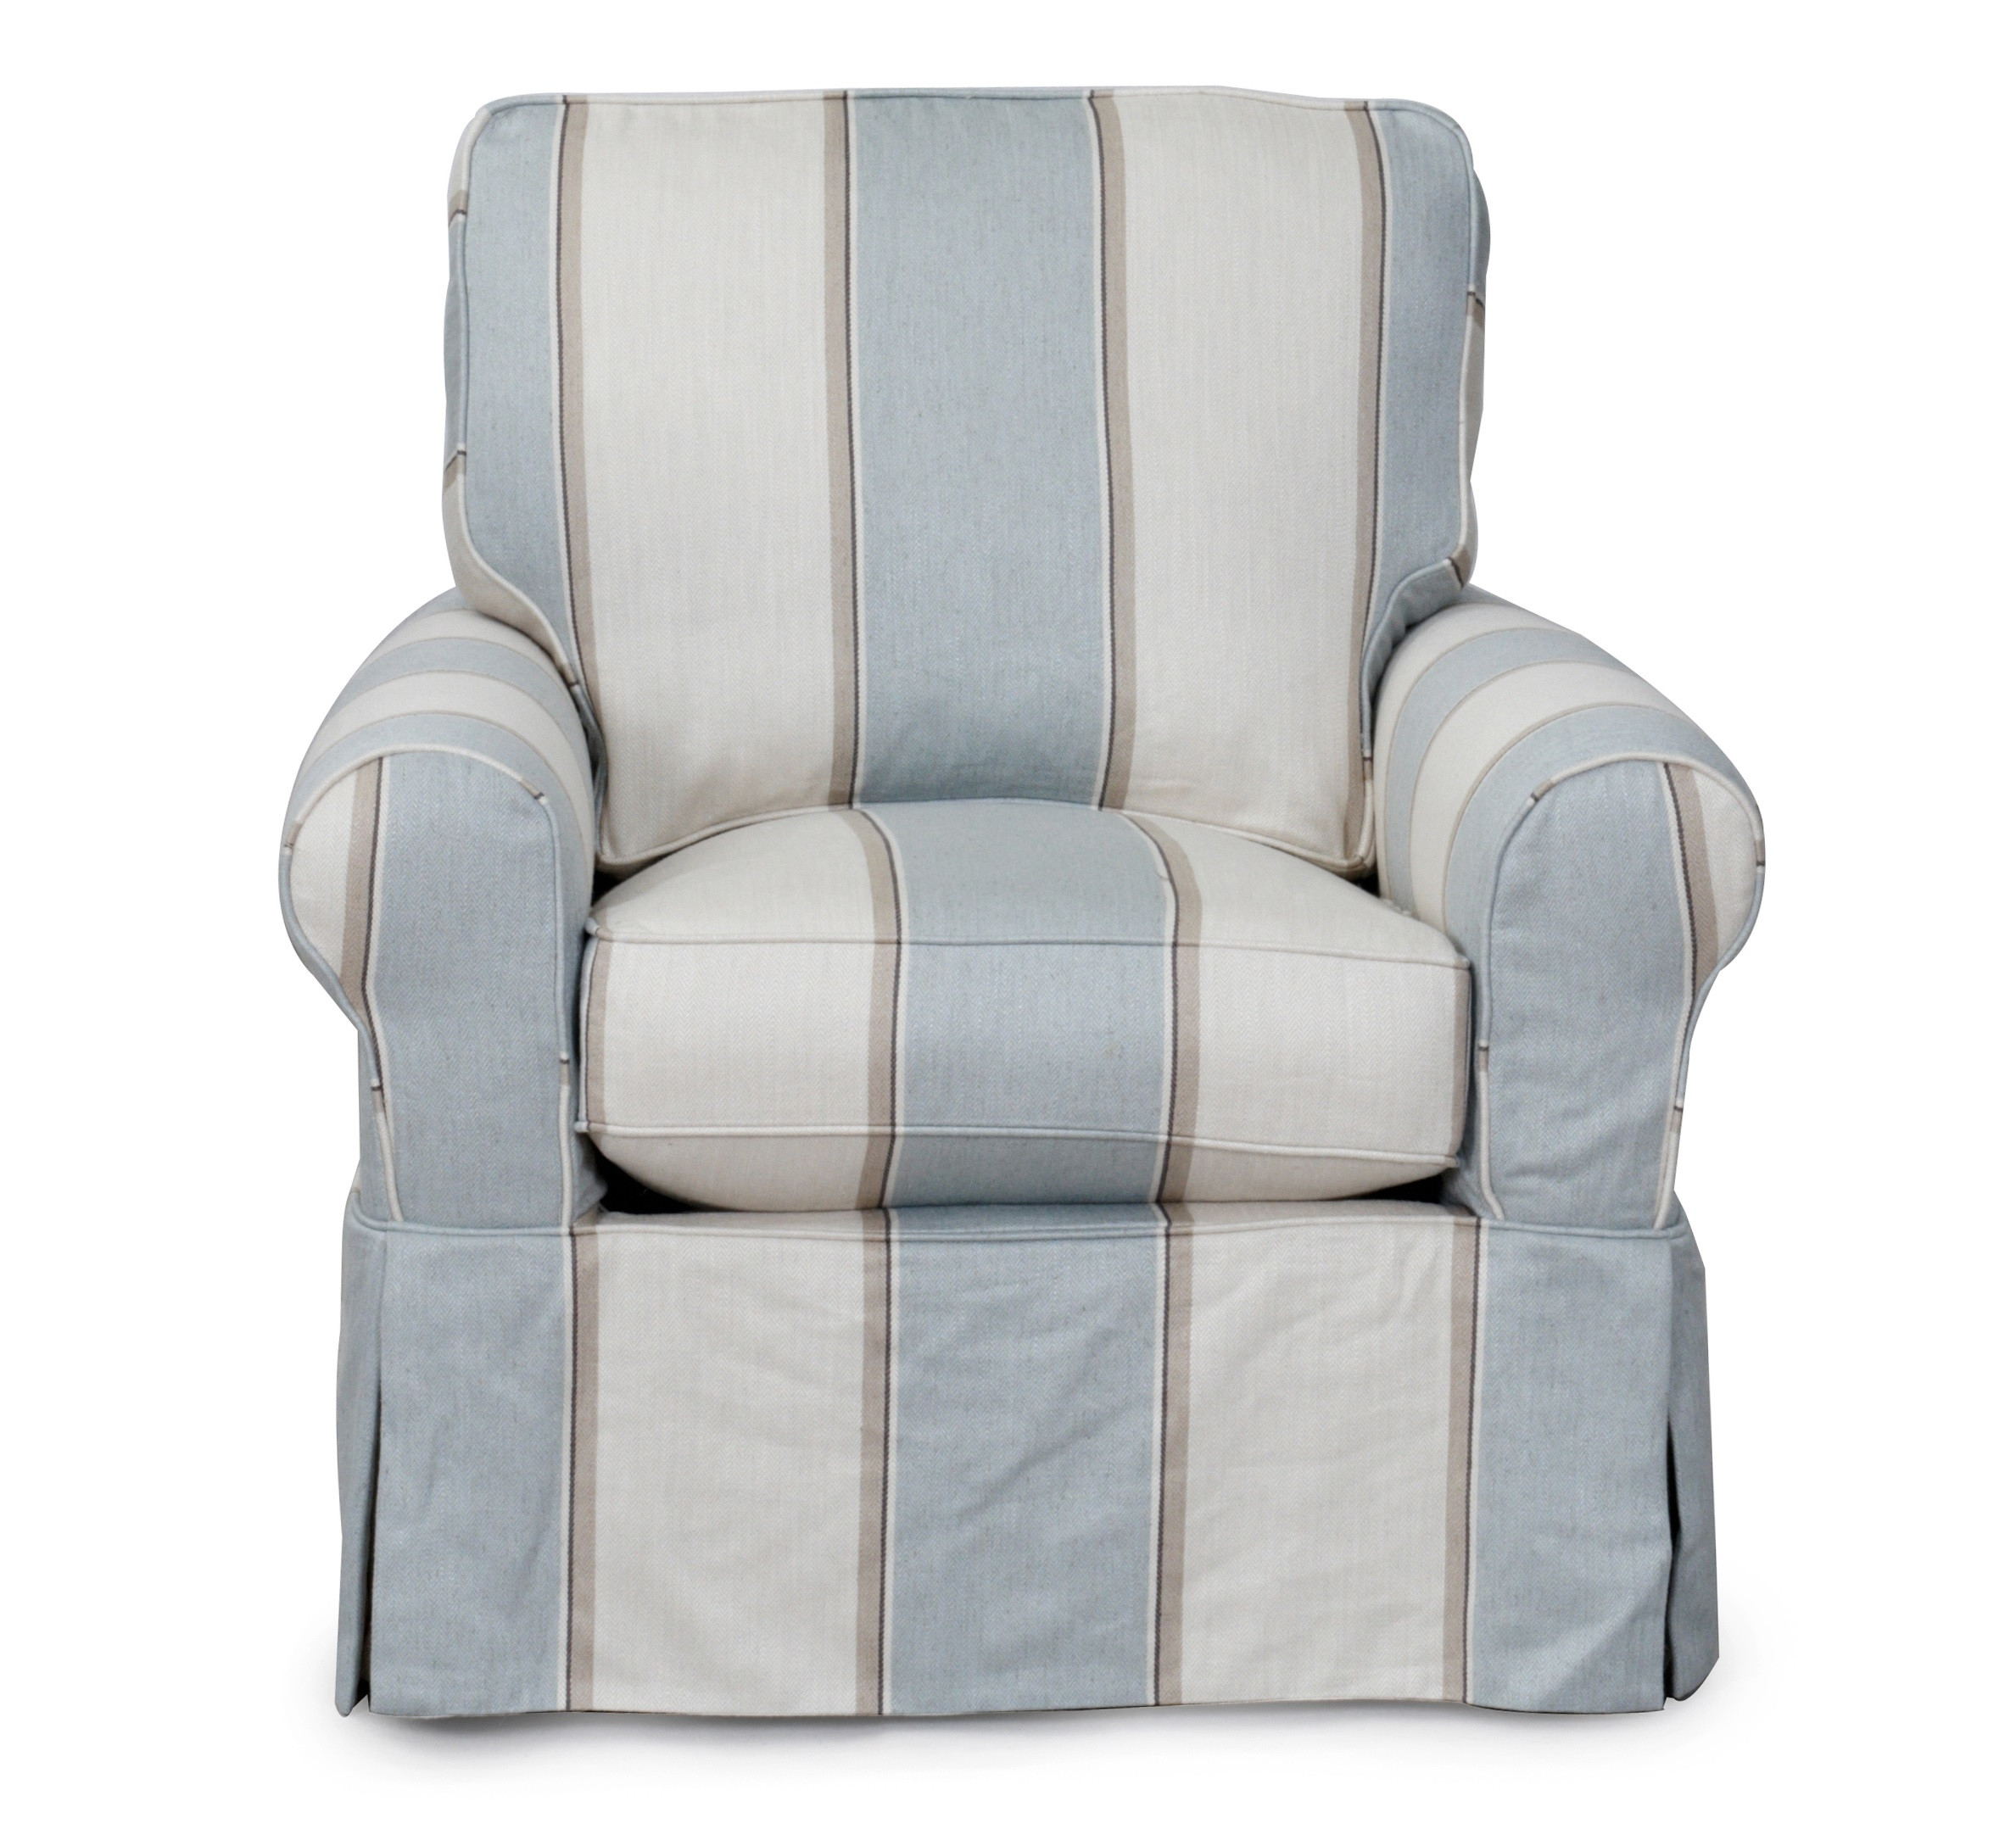 Swivel Chairs For Living Room
 Sunset Trading Horizon Slipcovered Swivel Rocking Chair